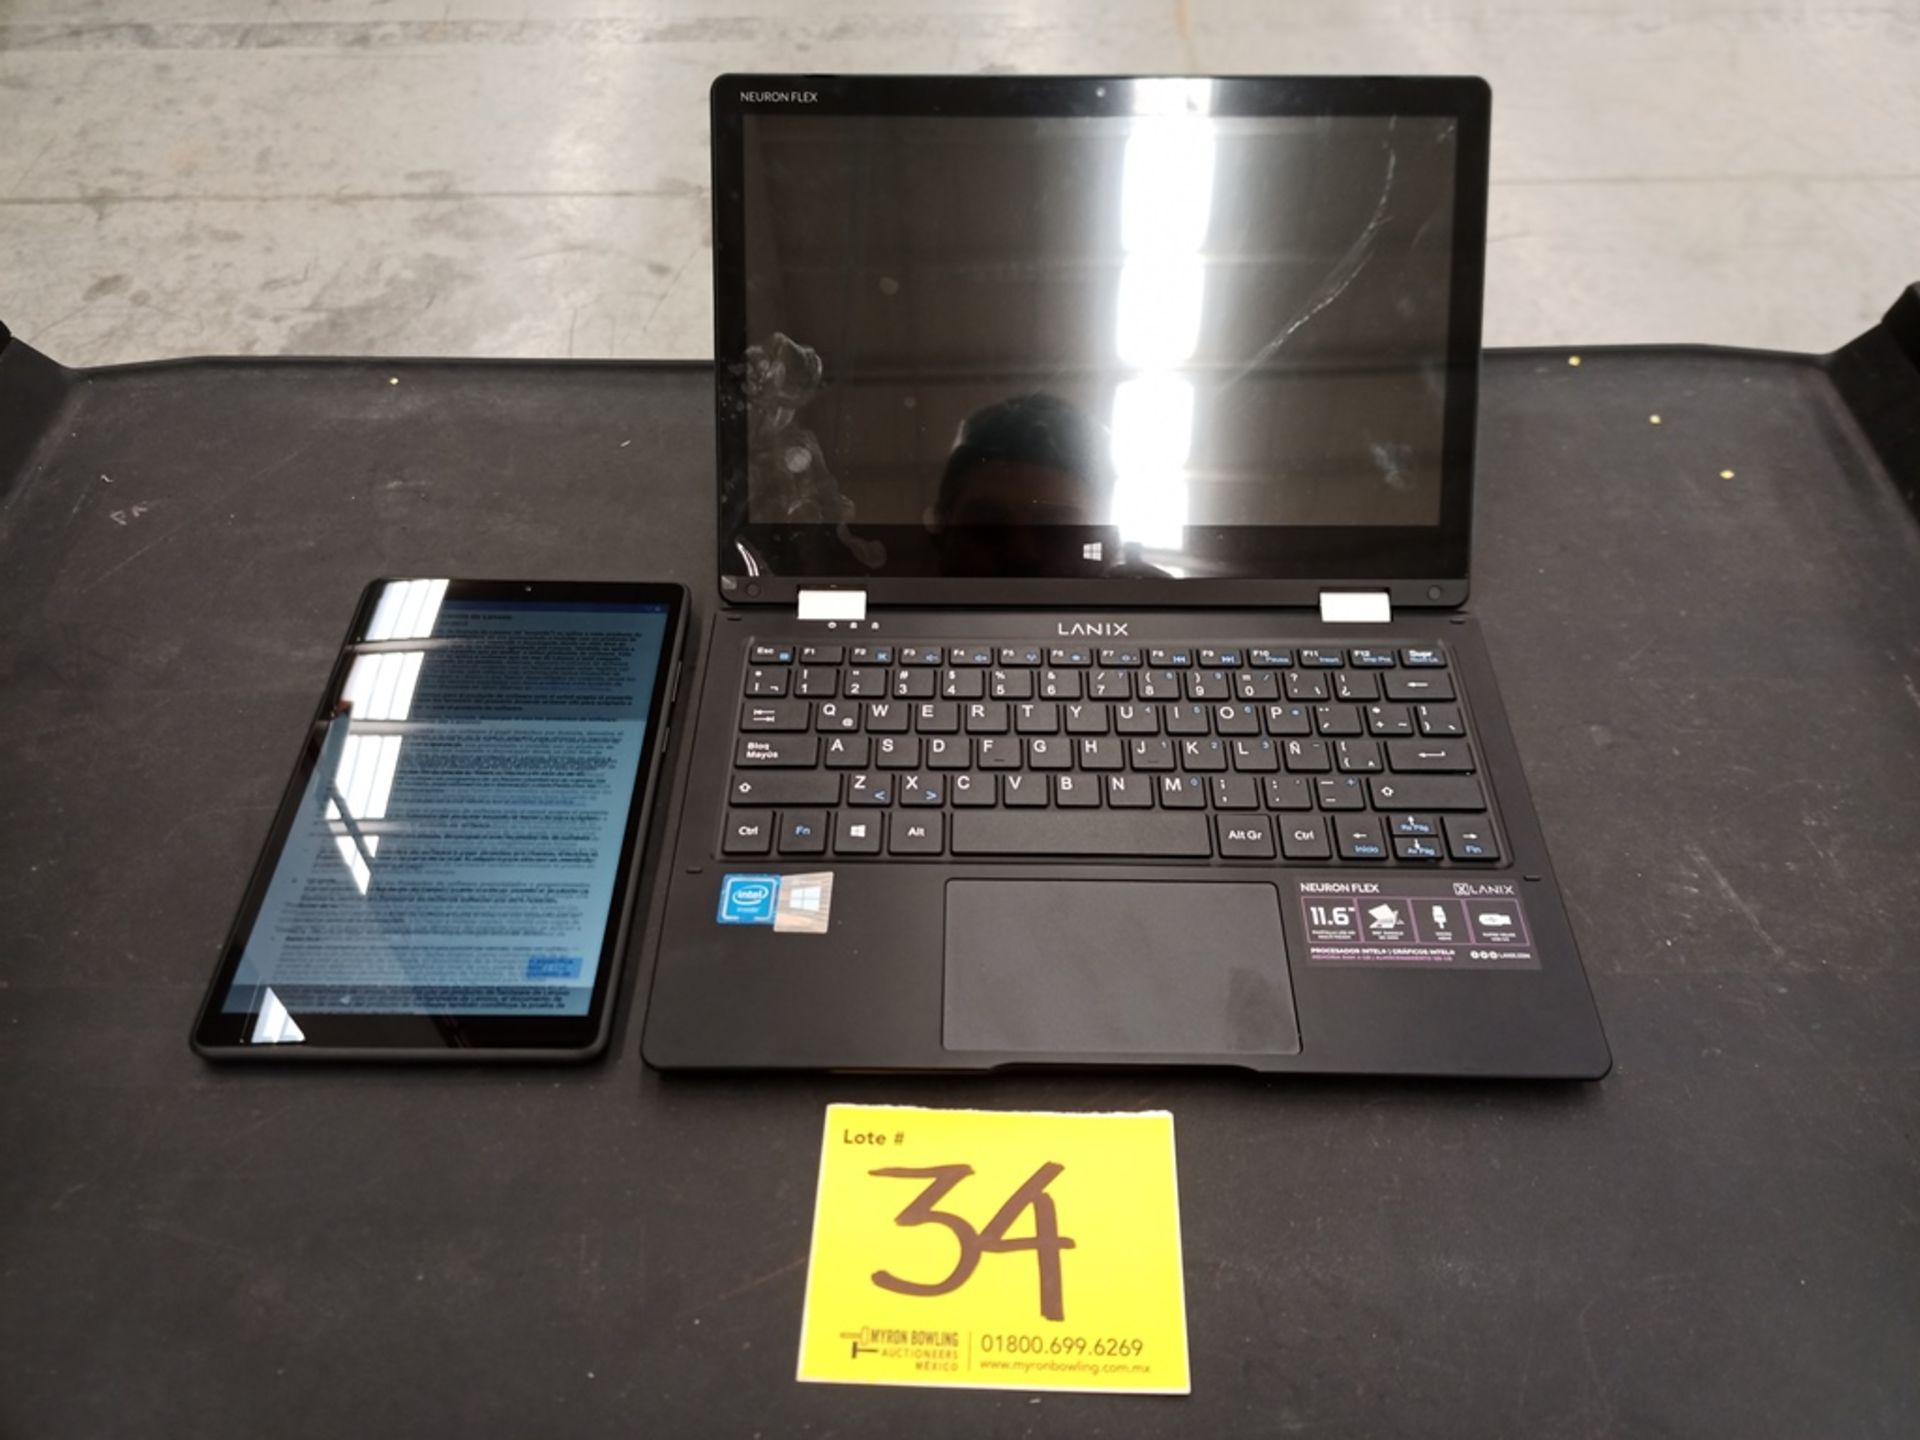 Lote de Computadora + Tablet contiene: 1 Computadora tipo mini Laptop marca Lanix, Modelo NeuronFle